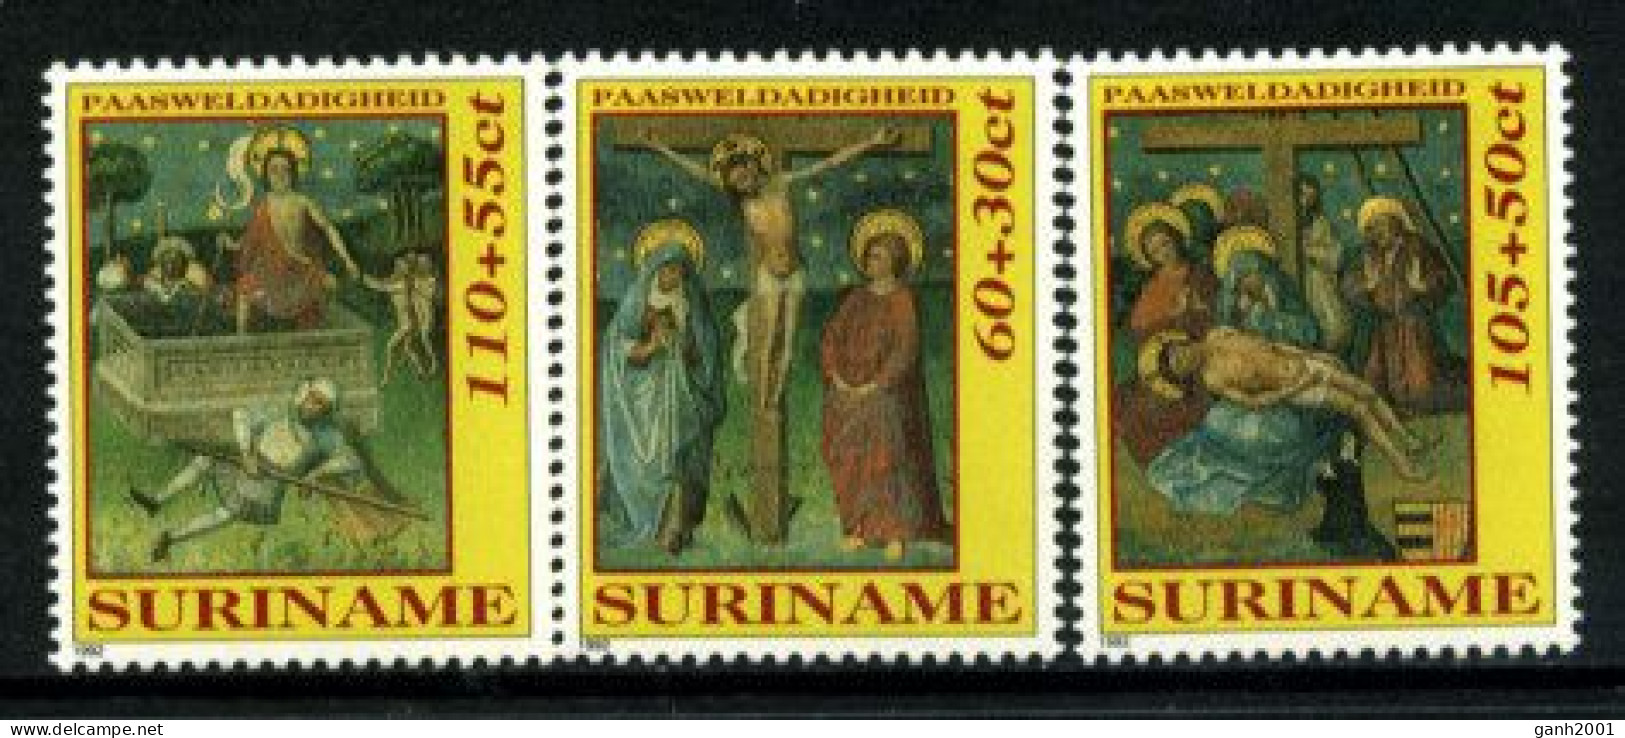 Suriname 1992 / Easter Religious Art MNH Pascuas Arte Religioso Ostern Kunst / 0435  38-33 - Pasen